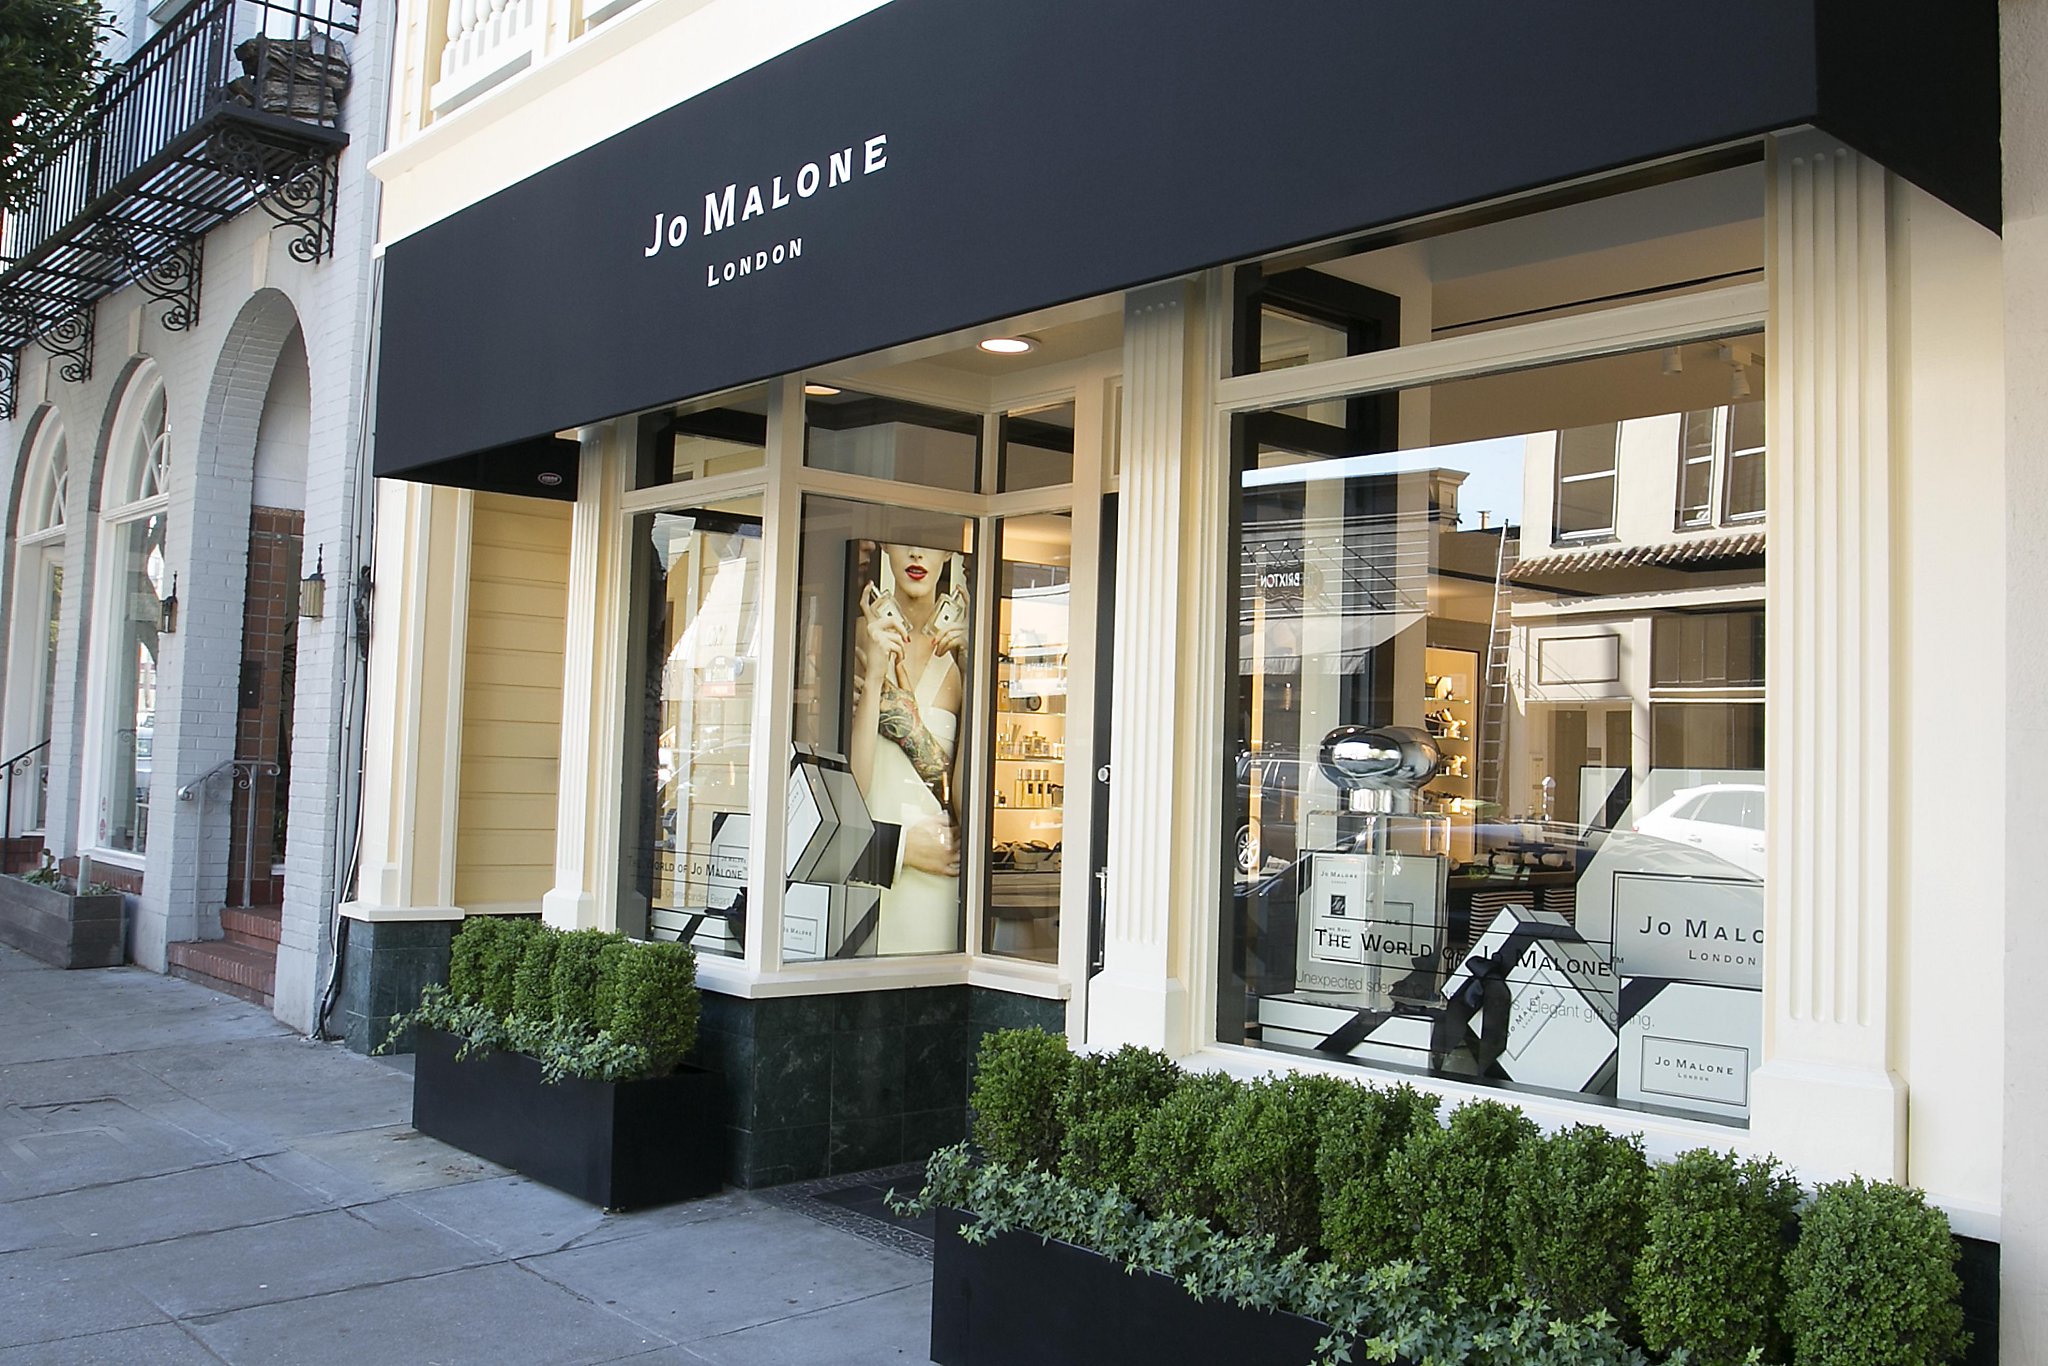 Jo Malone London: British perfumery opens in SF - San Francisco Chronicle